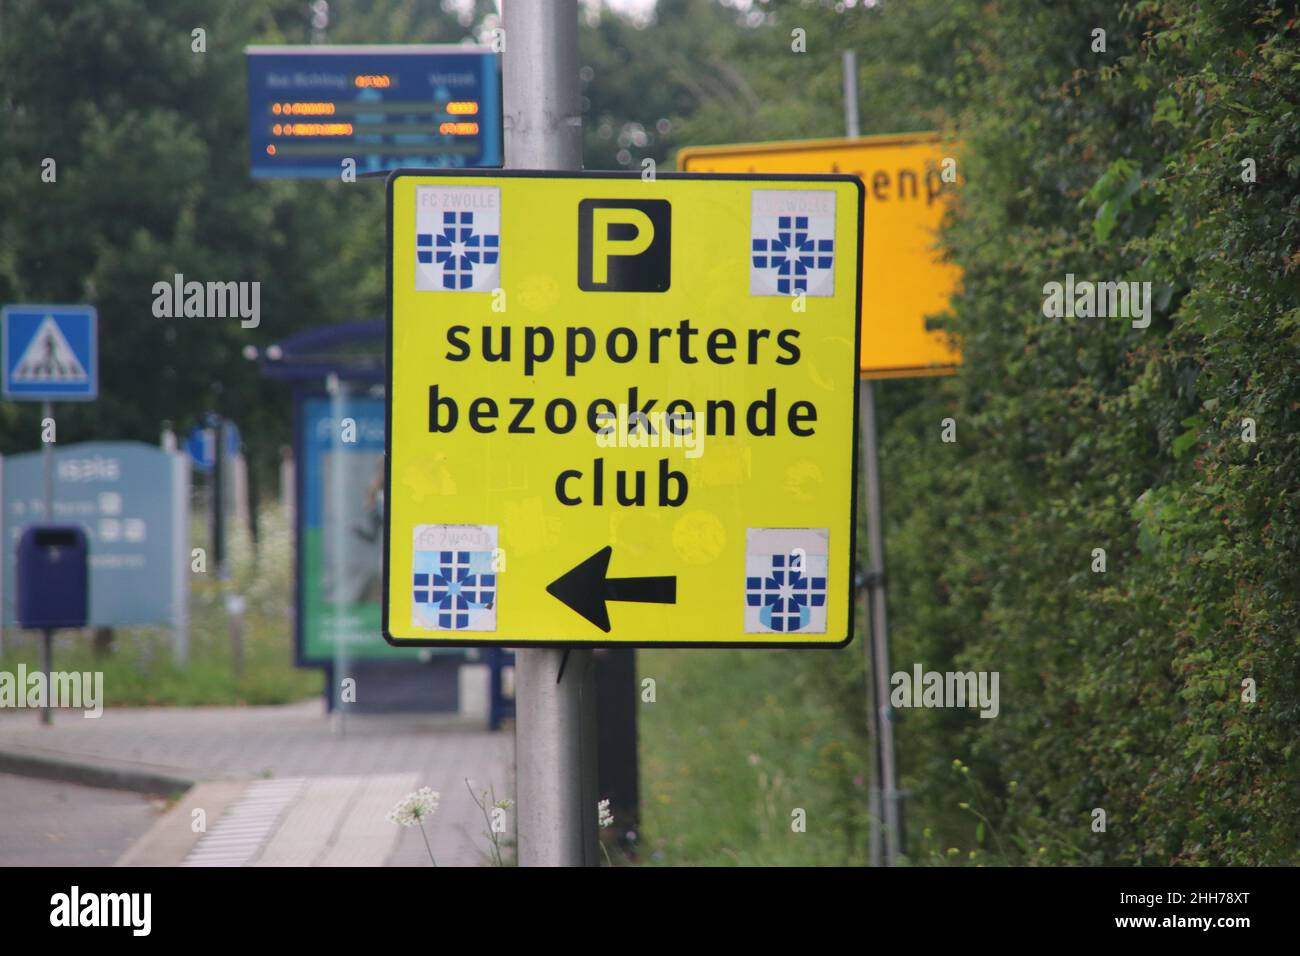 Stadium MAC3park from Eredivisie Football club PEC Zwolle in the Netherlands. Stock Photo